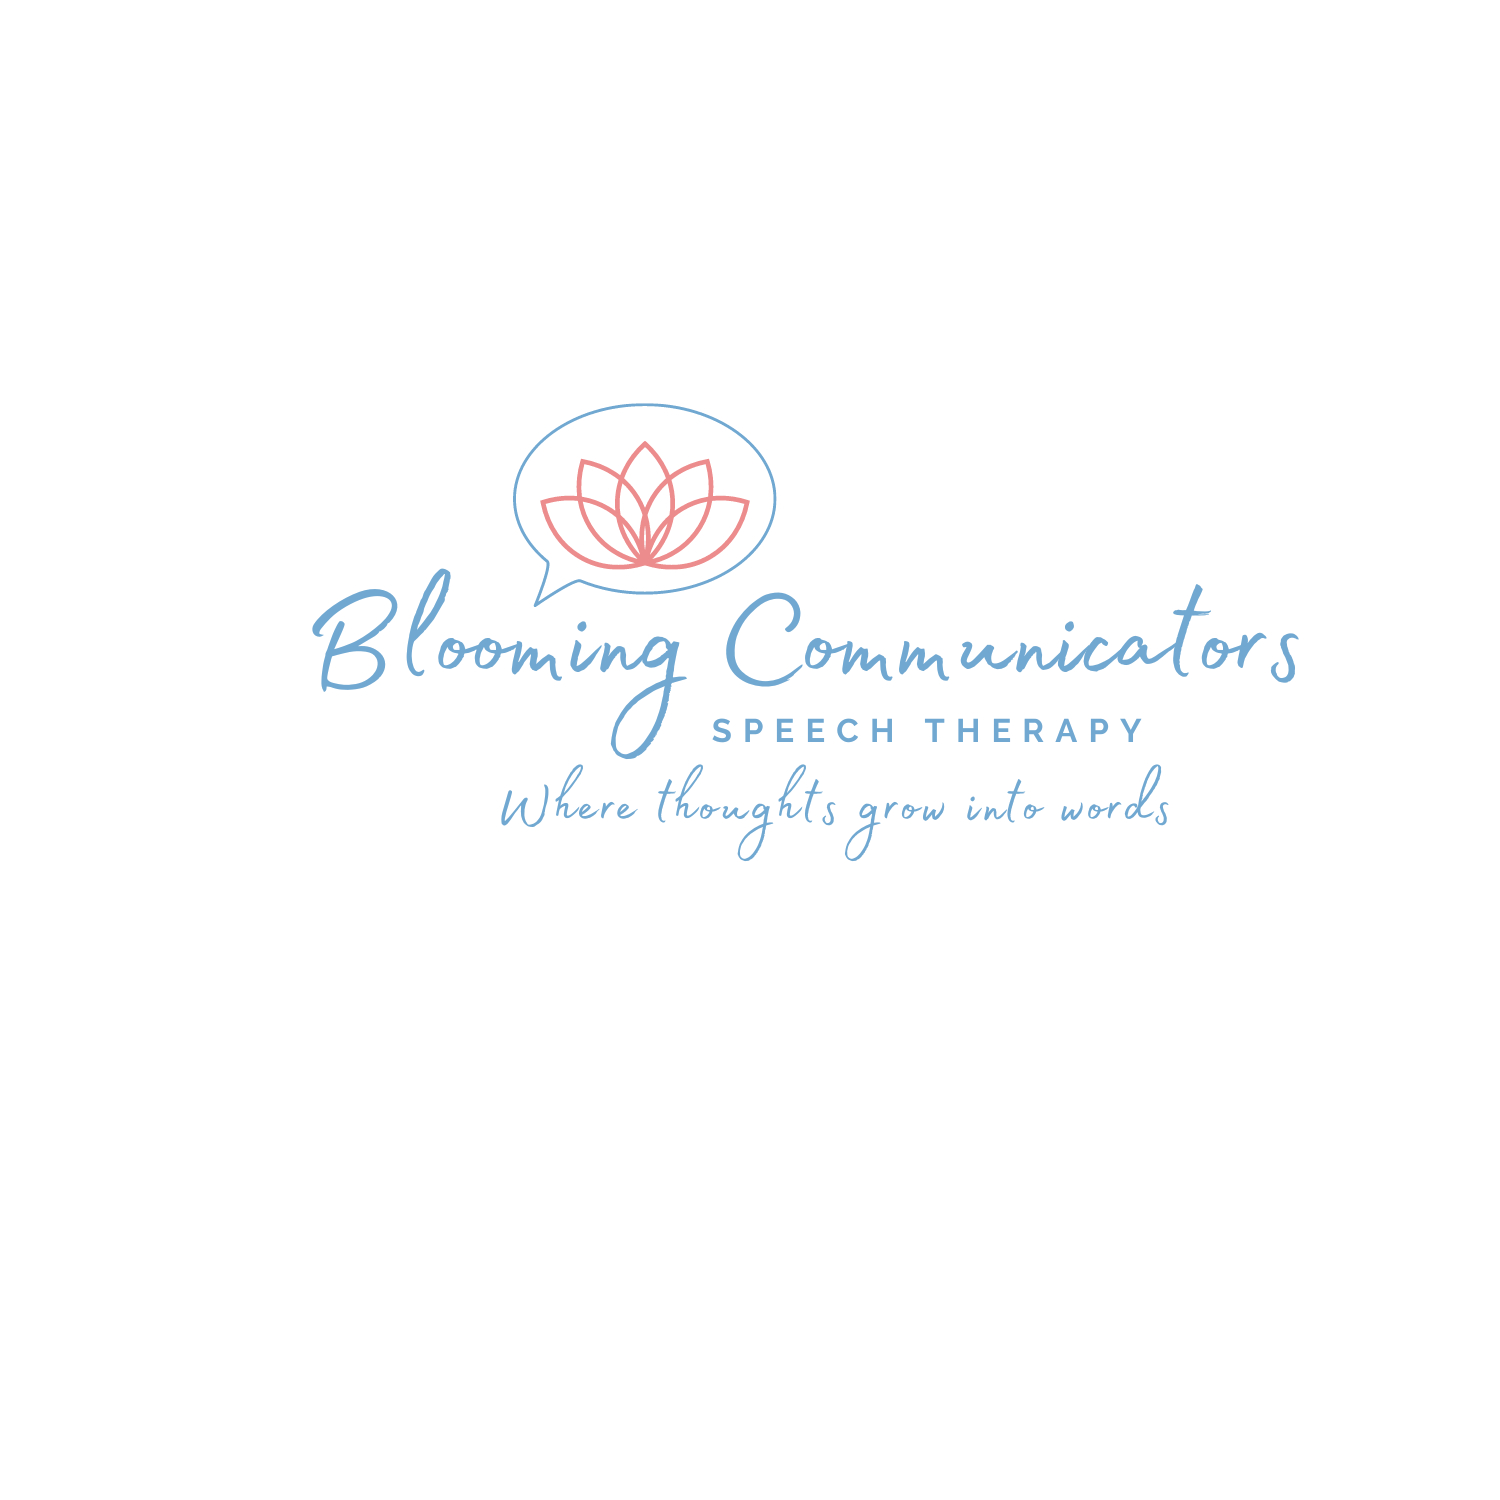 Blooming-Communicators-Speech-Therapy-LOGO.jpg